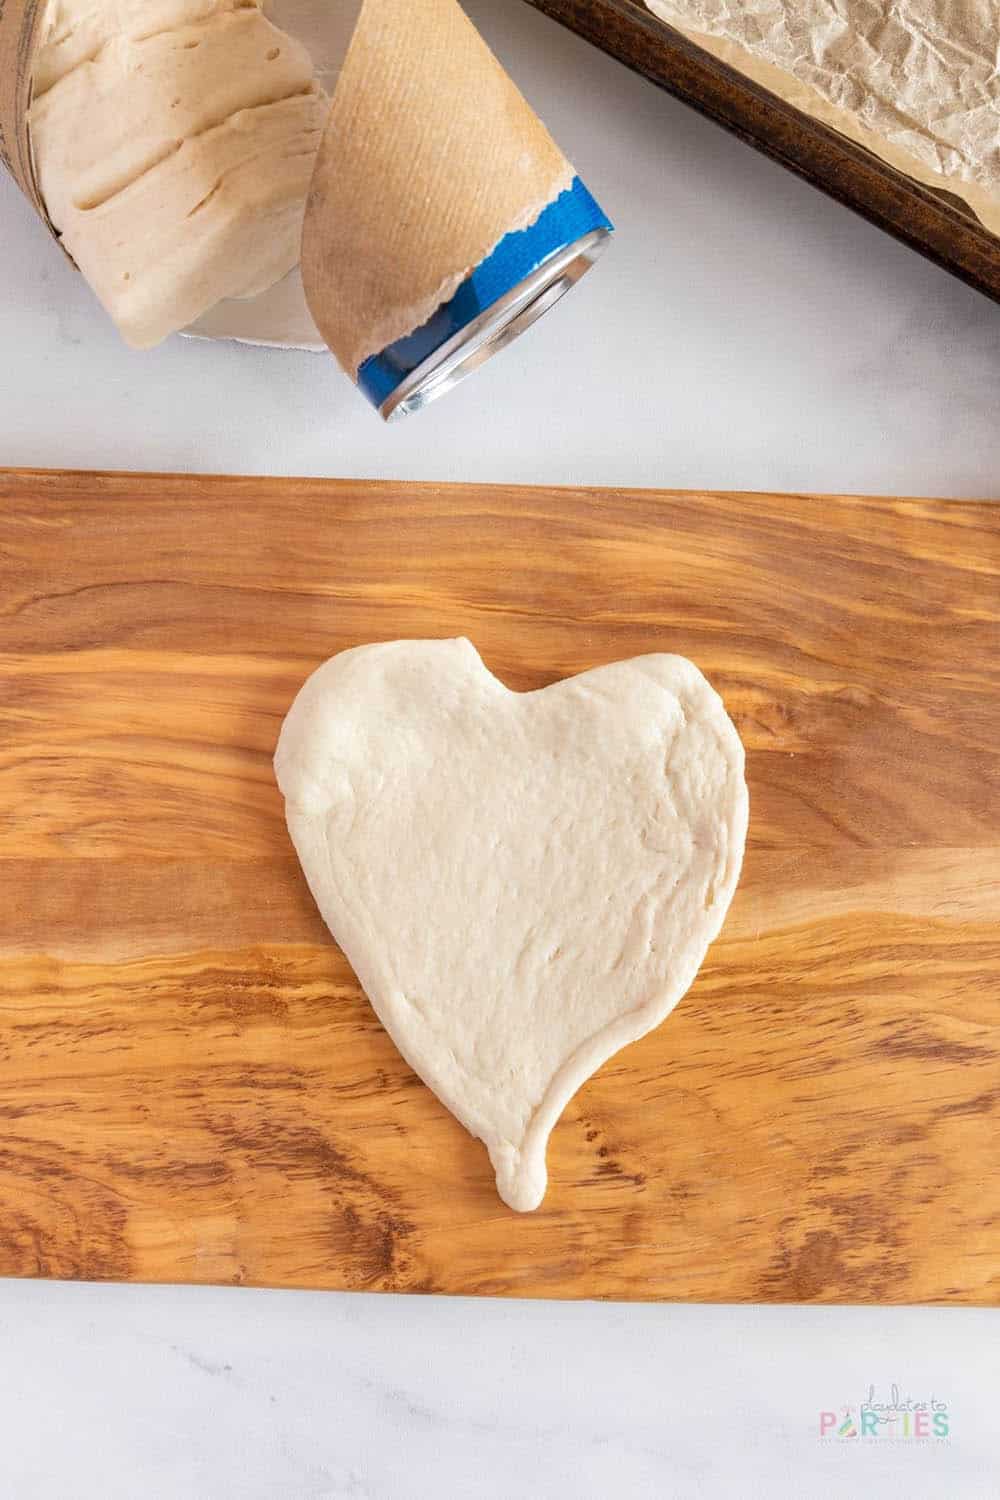 Mini heart shaped pizza crust on a cutting board.